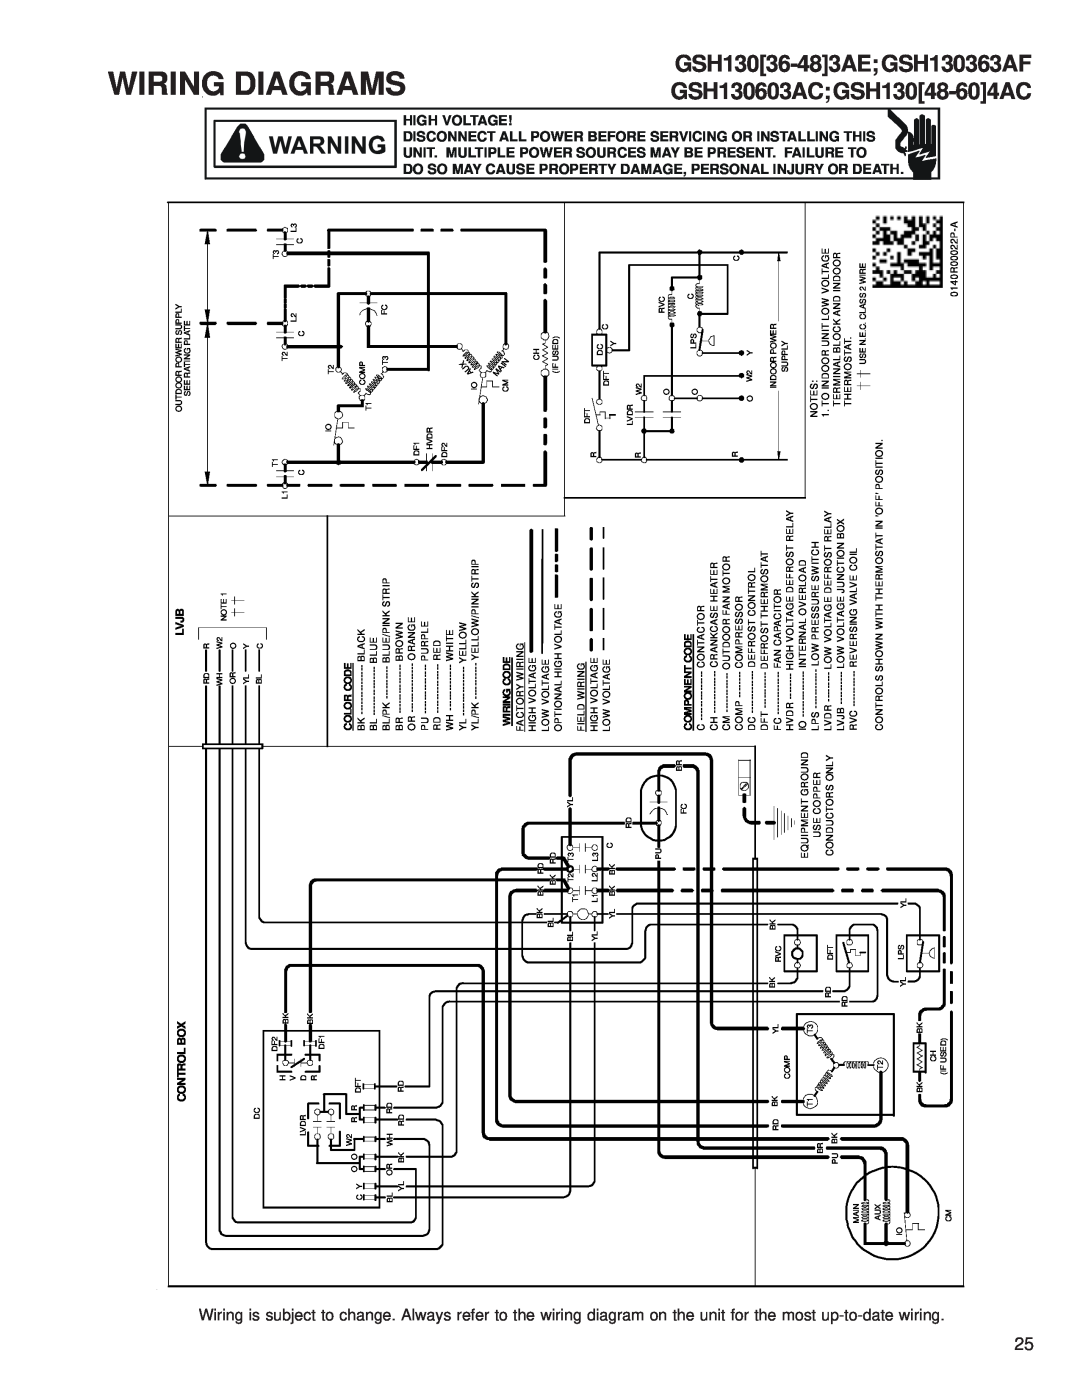 Goodmans GSH 13 SEER - 3 Phase Split System Heat Pump Diagrams, GSH130363AF GSH13048-604AC, Wiring is, wiring, Death 